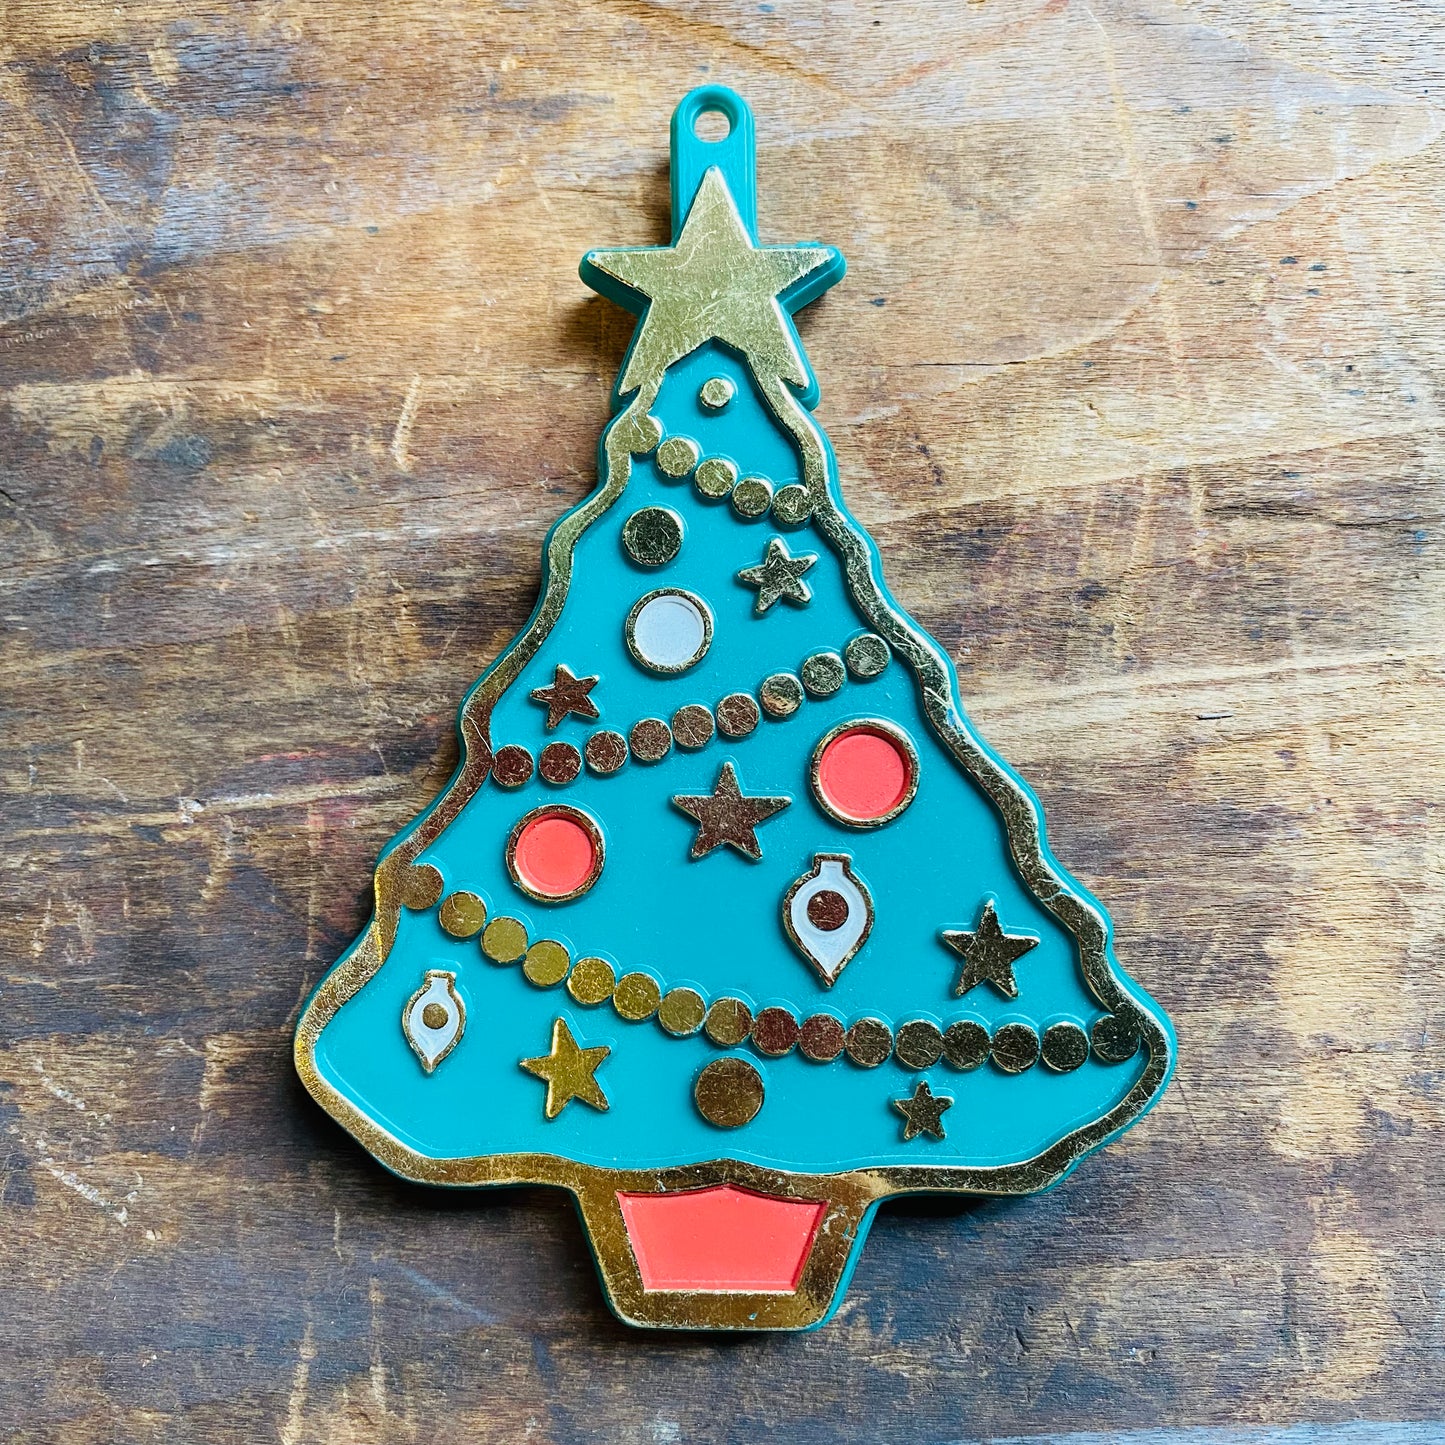 【USA vintage】クッキー型 クリスマスツリー